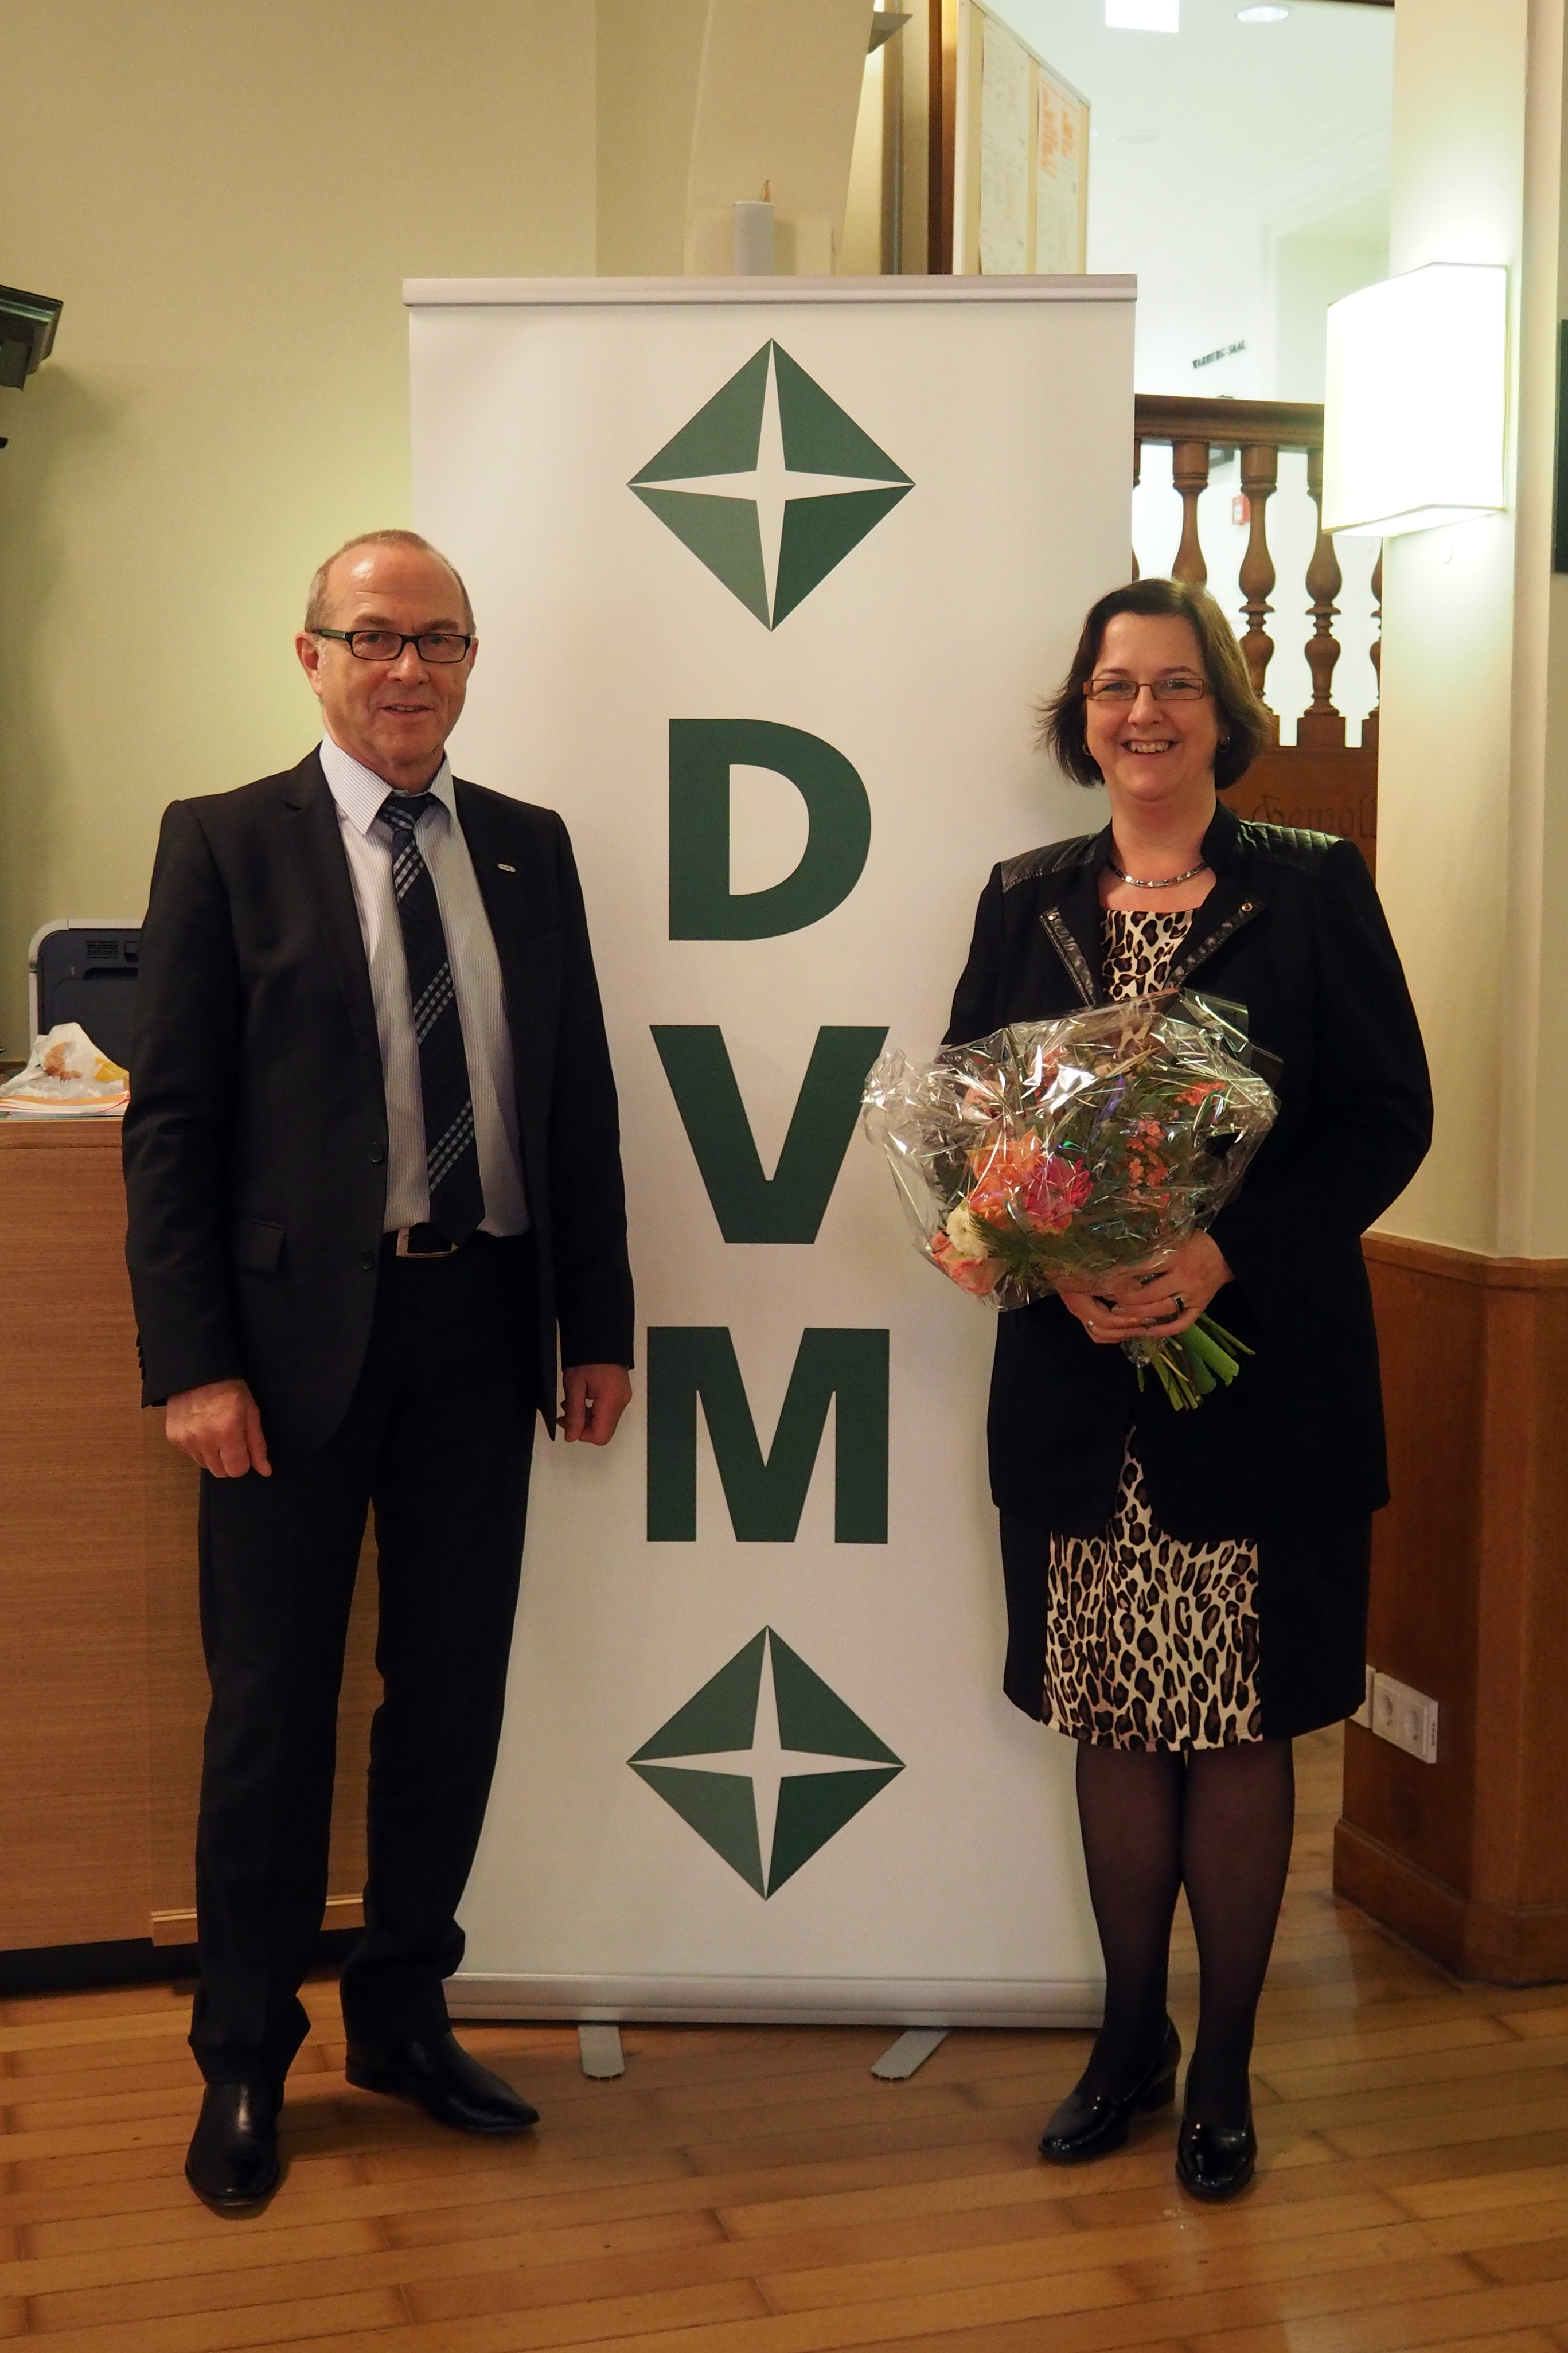 Prof. Martina Zimmermann (Fraunhofer IWS) and Dipl.-Ing. Lothar Krüger (BMW Group), Chairman of the Executive Board of DVM 